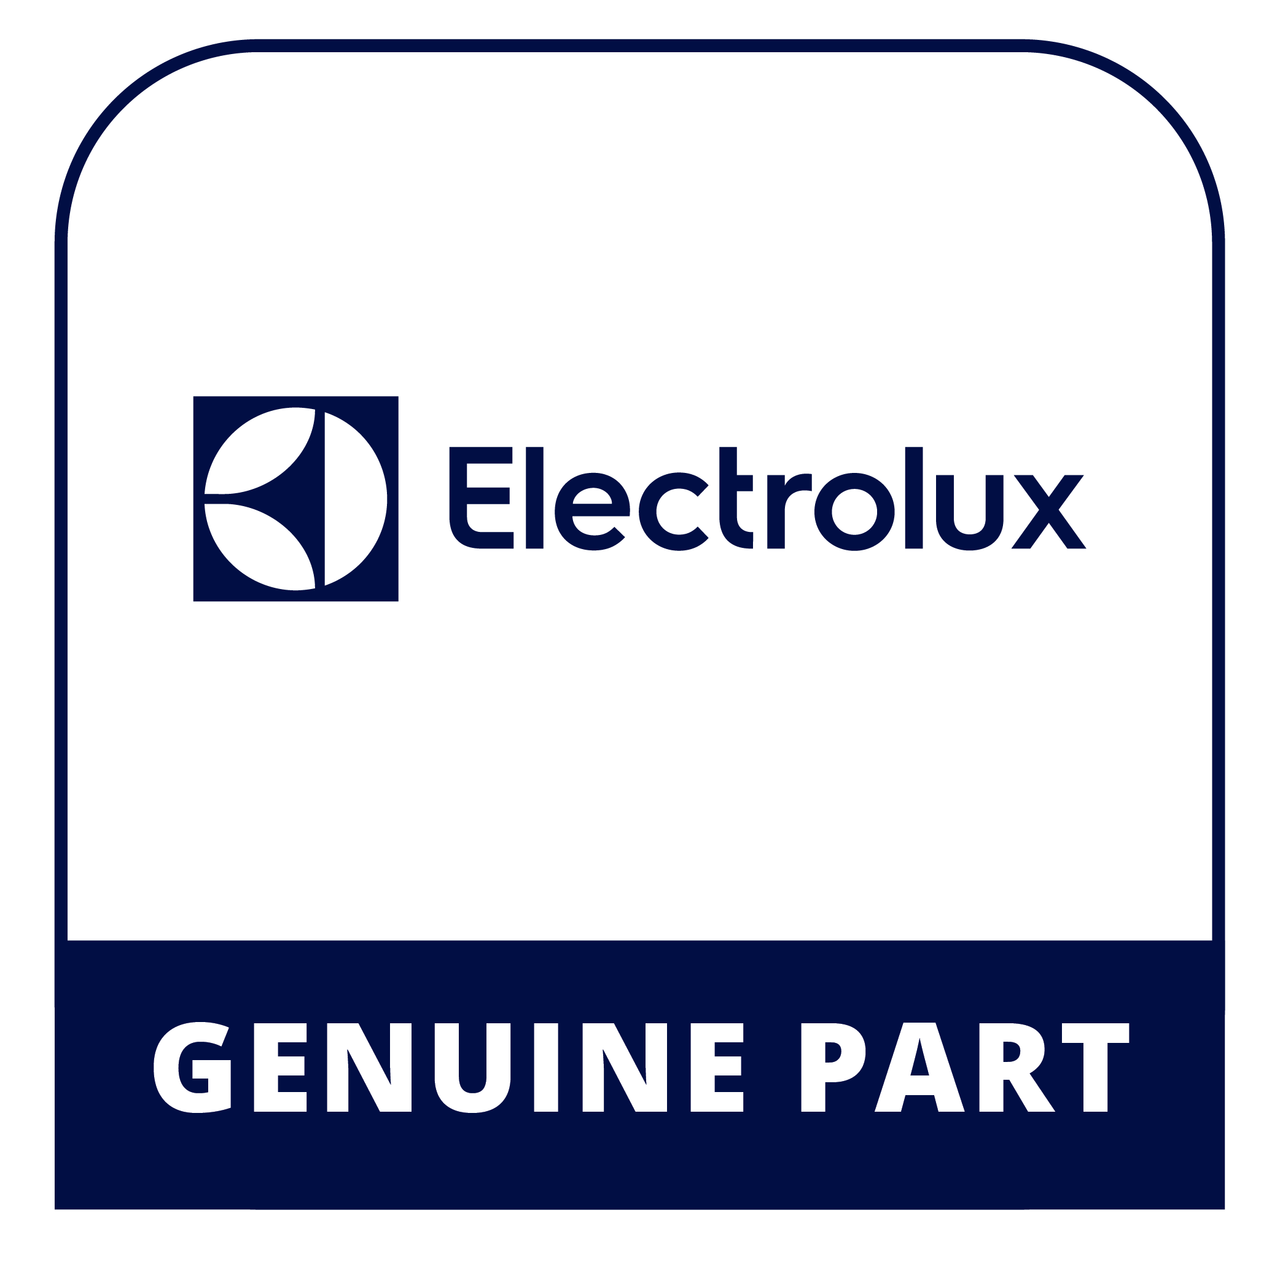 Frigidaire - Electrolux 224007605 Magnet - Genuine Electrolux Part